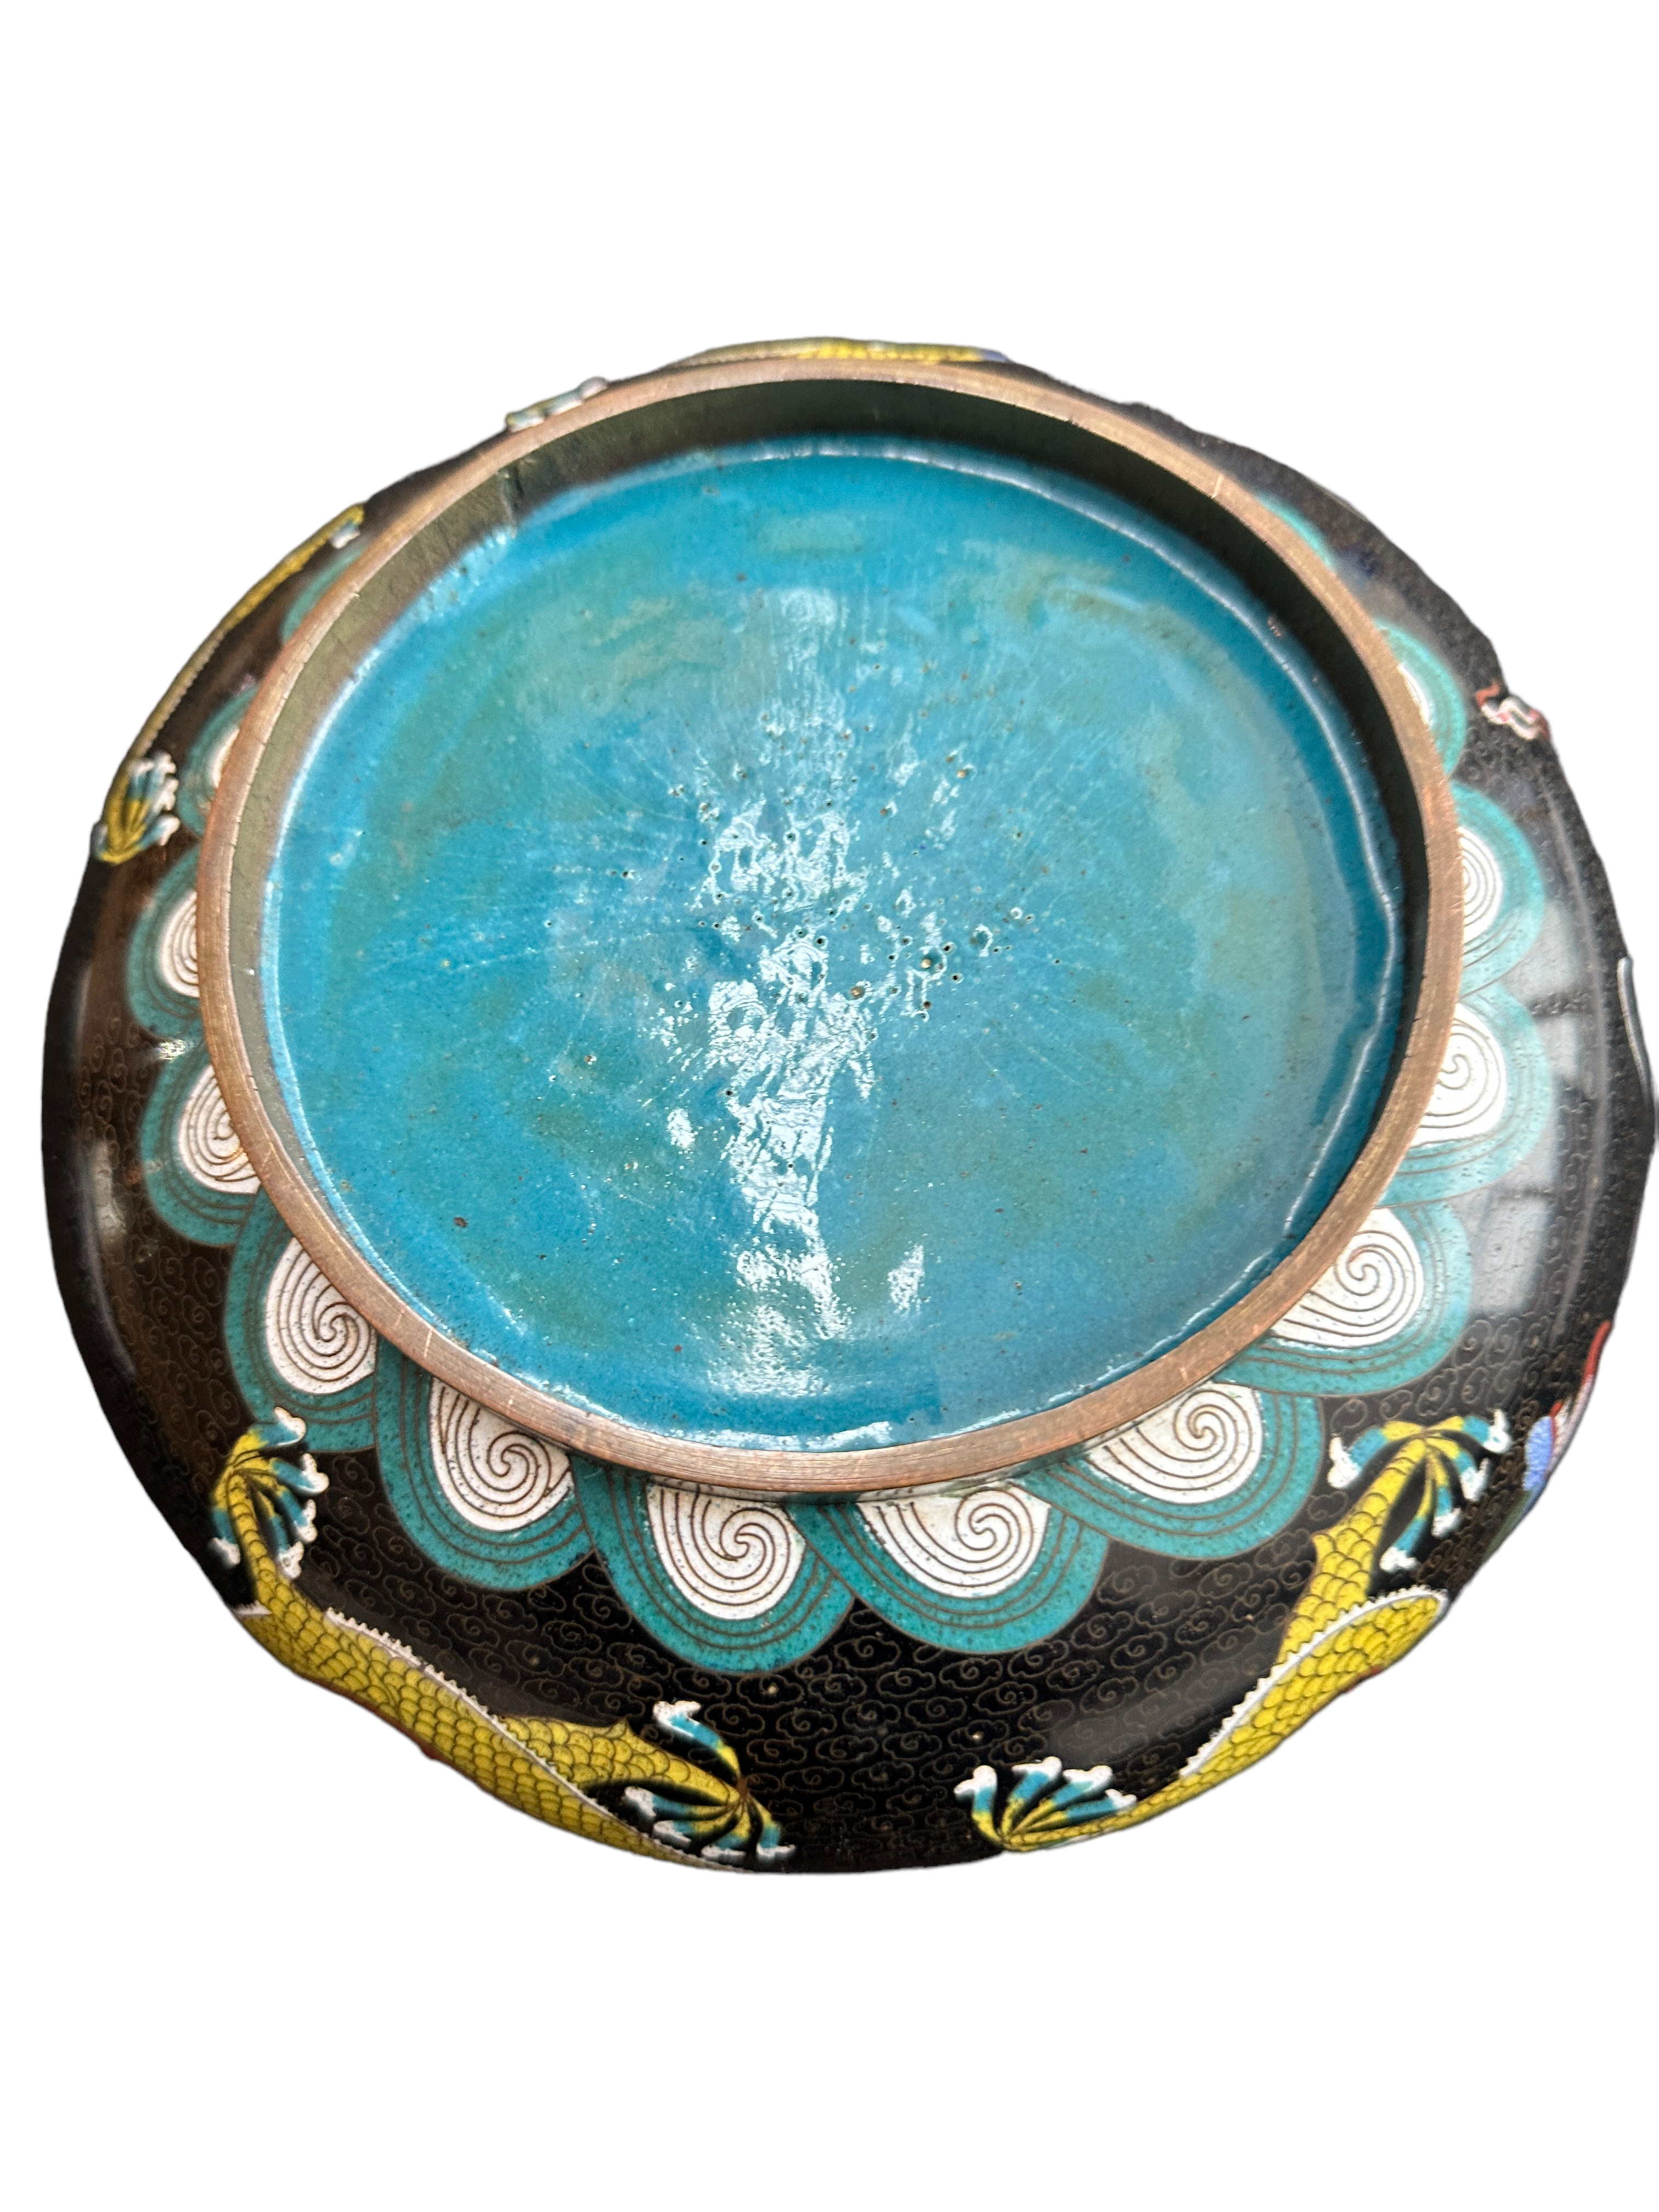 Antique/Vintage Cloisonne Bowl - 20cm diameter and 6cm tall. - Image 4 of 6